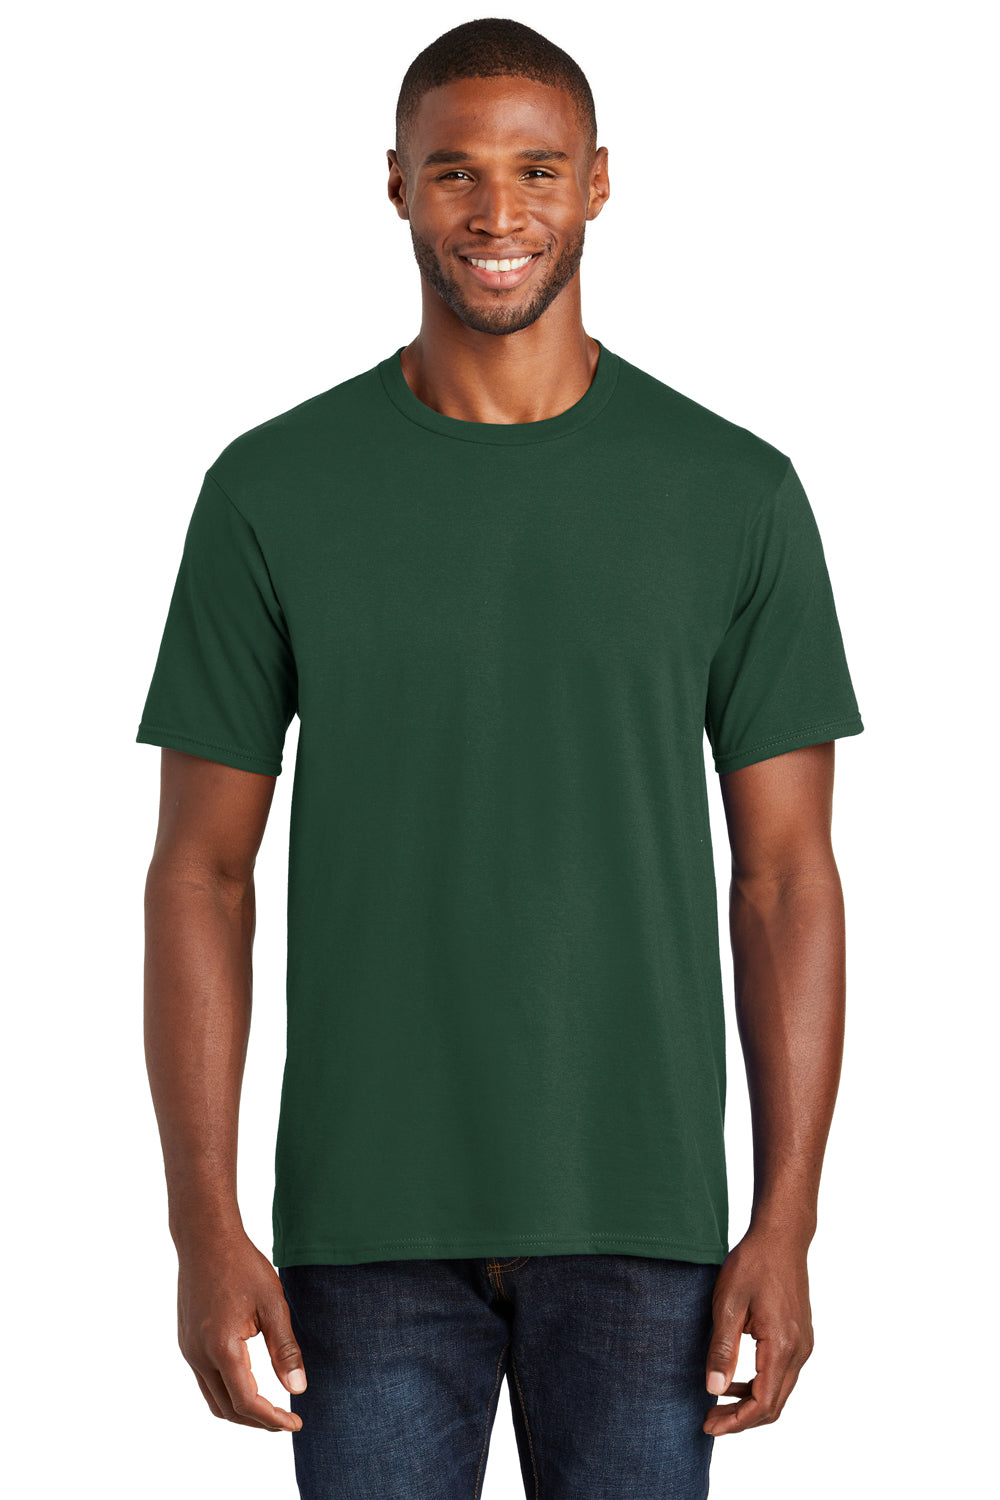 Port & Company PC450 Mens Fan Favorite Short Sleeve Crewneck T-Shirt Forest Green Front